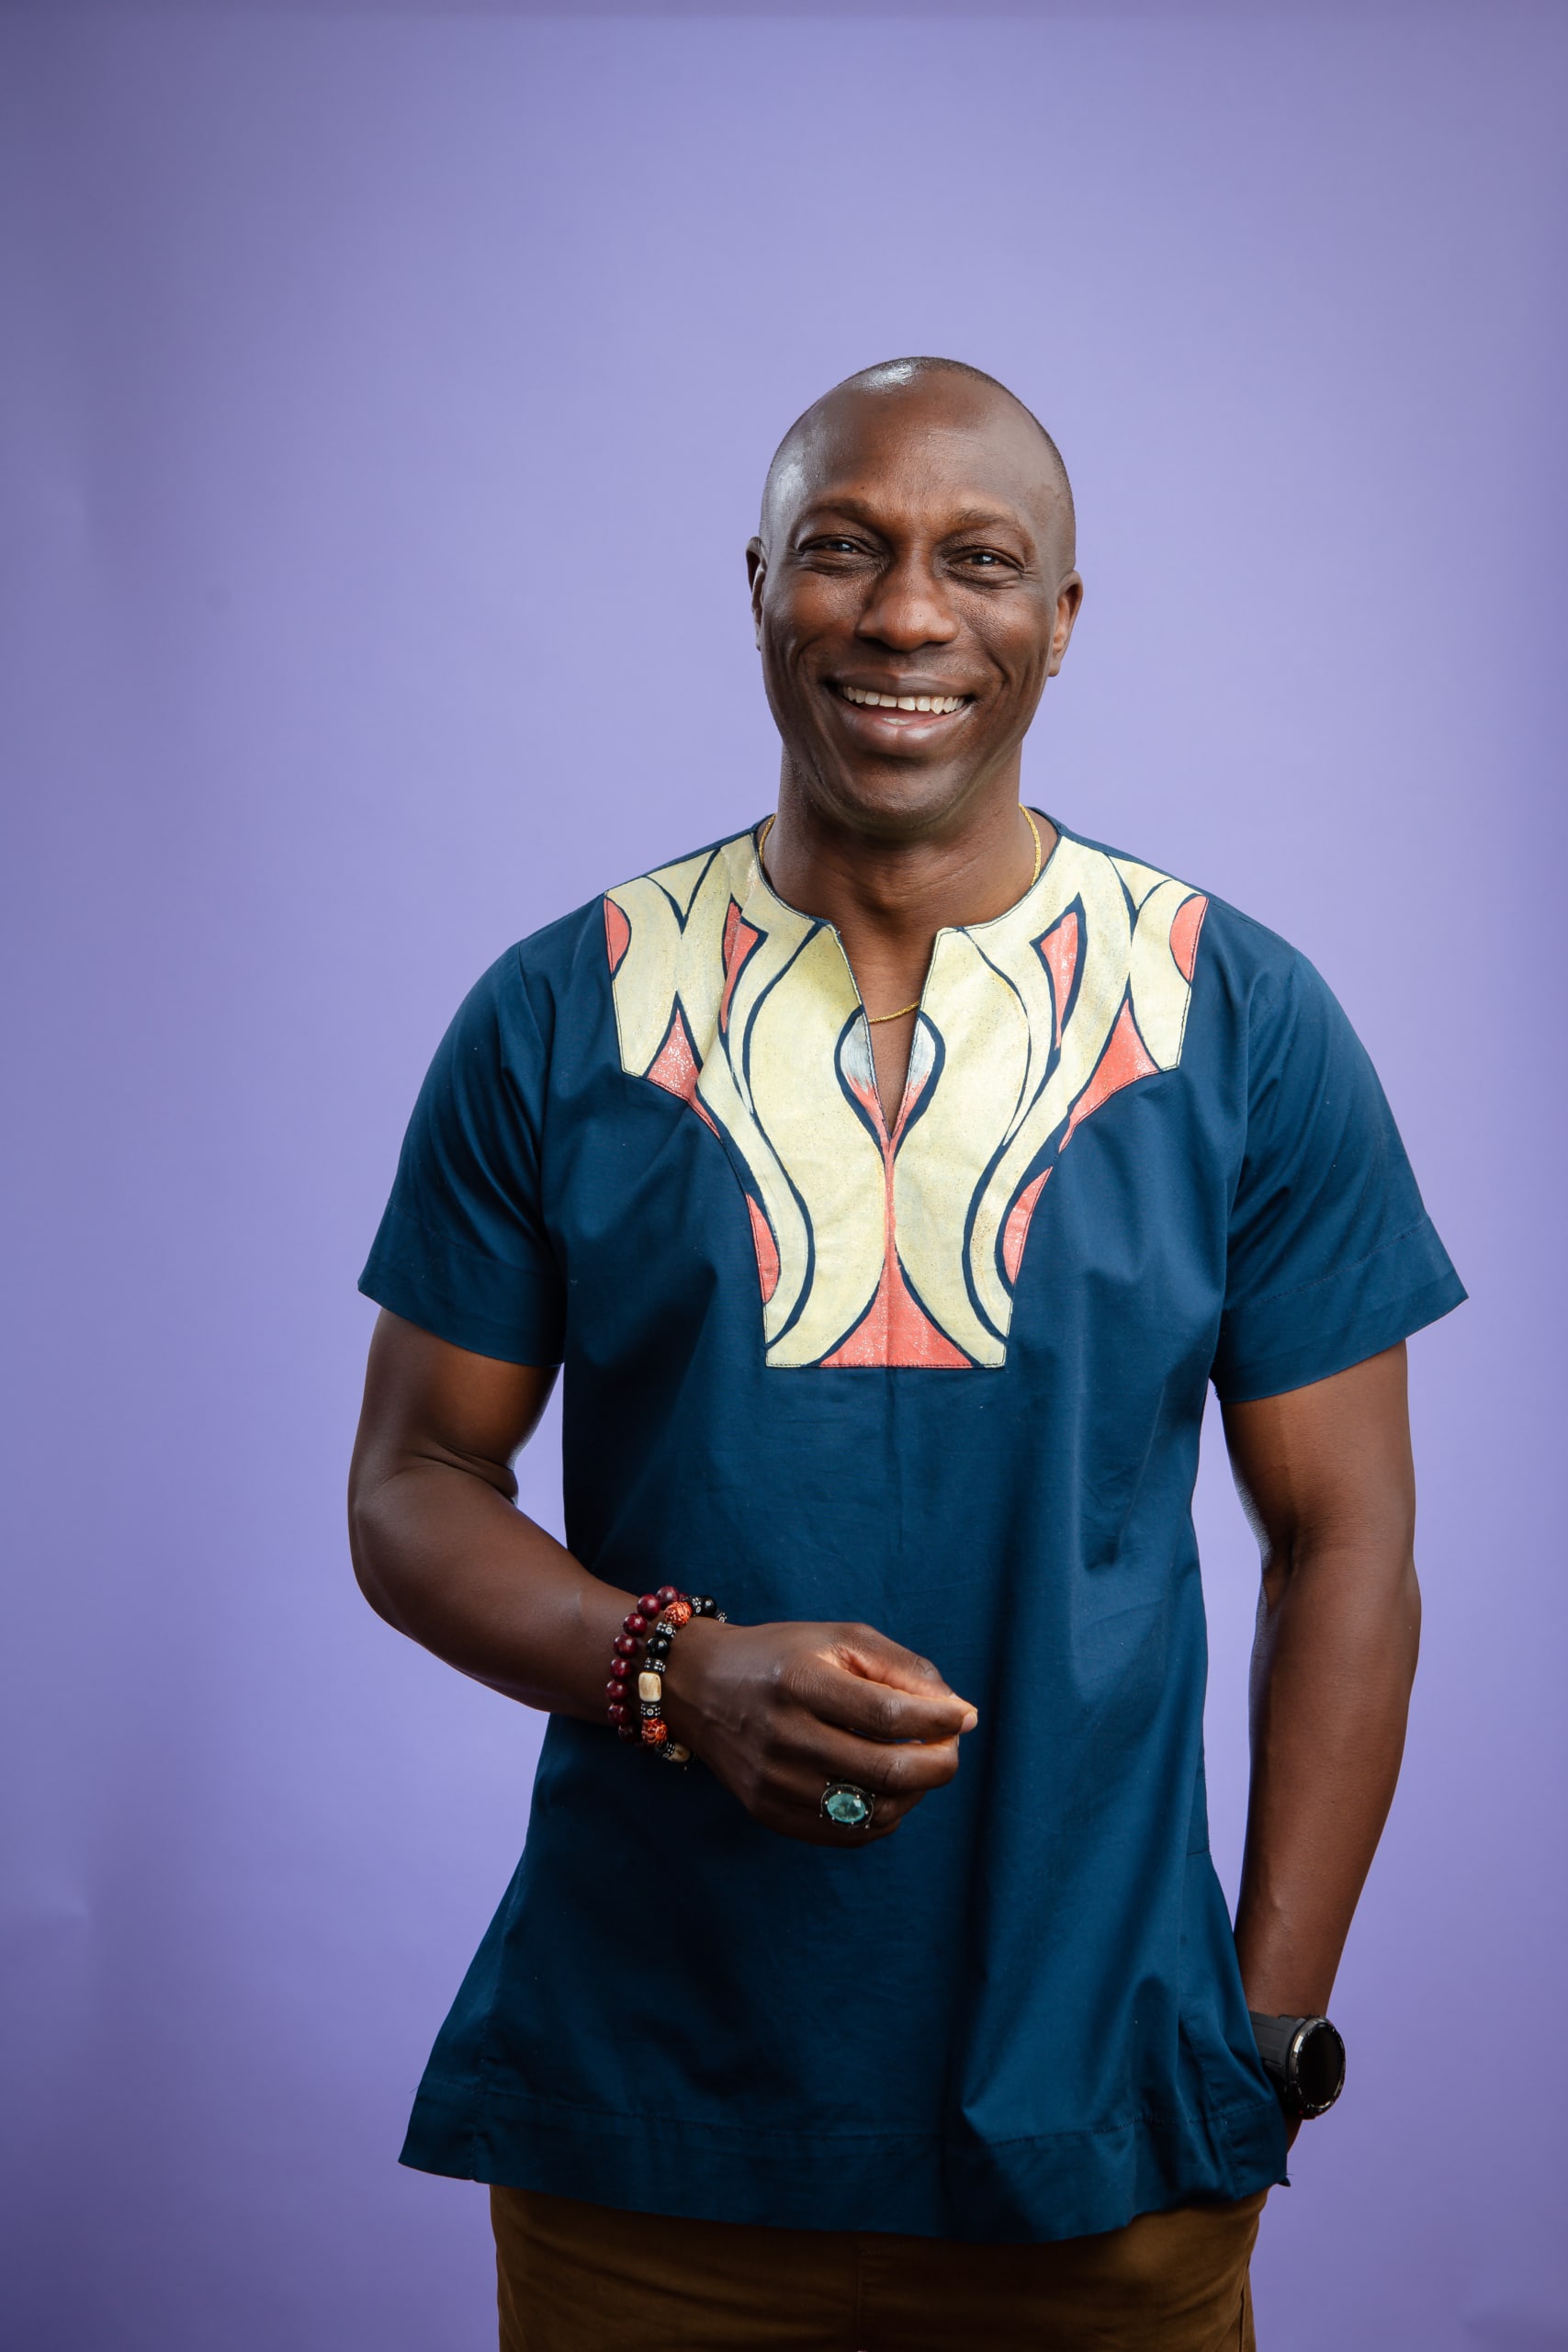 A portrait of Dr Efe Obudu against a purple background